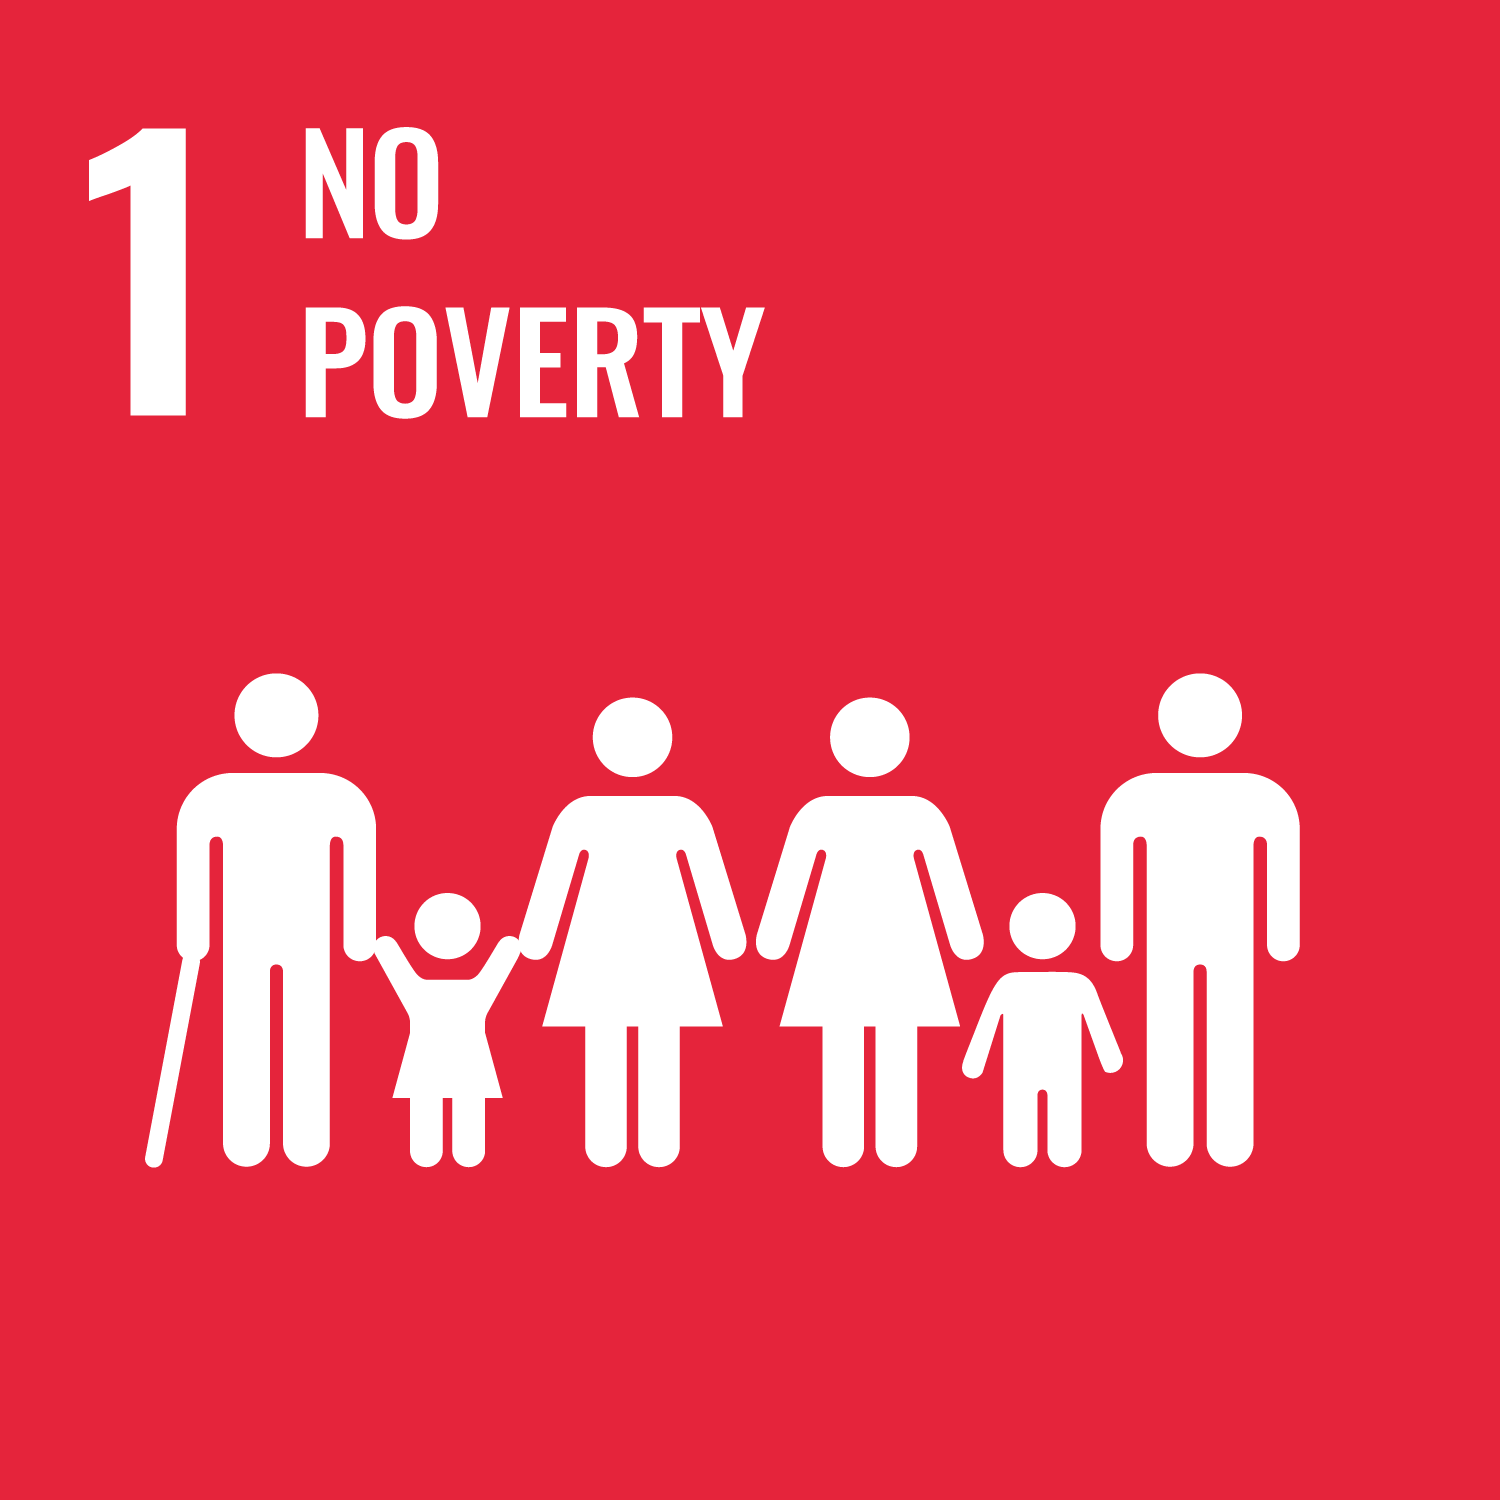 UN Sustainable Development Goal 1